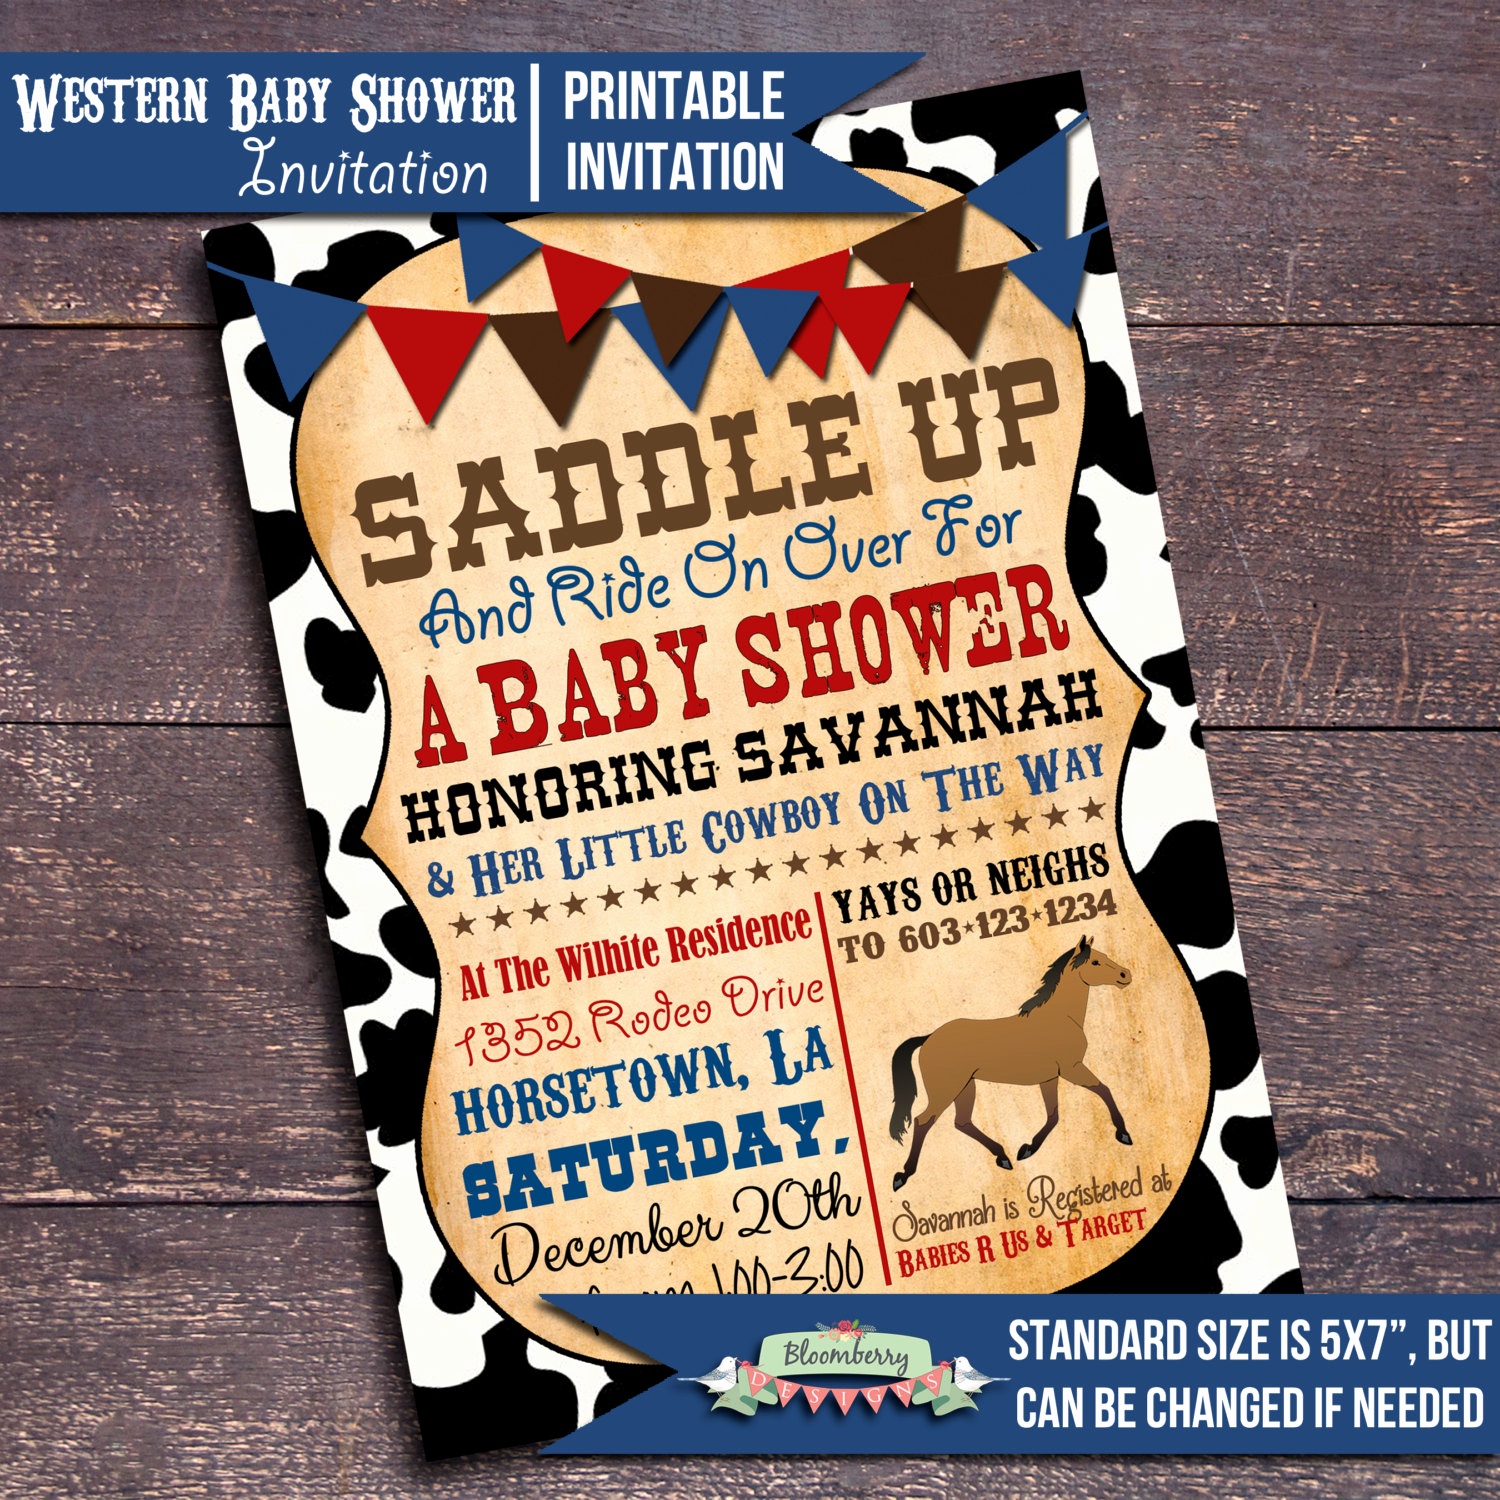 Western Baby Shower Invitation Lovely Printable Western Baby Shower Invitation Western Baby Shower